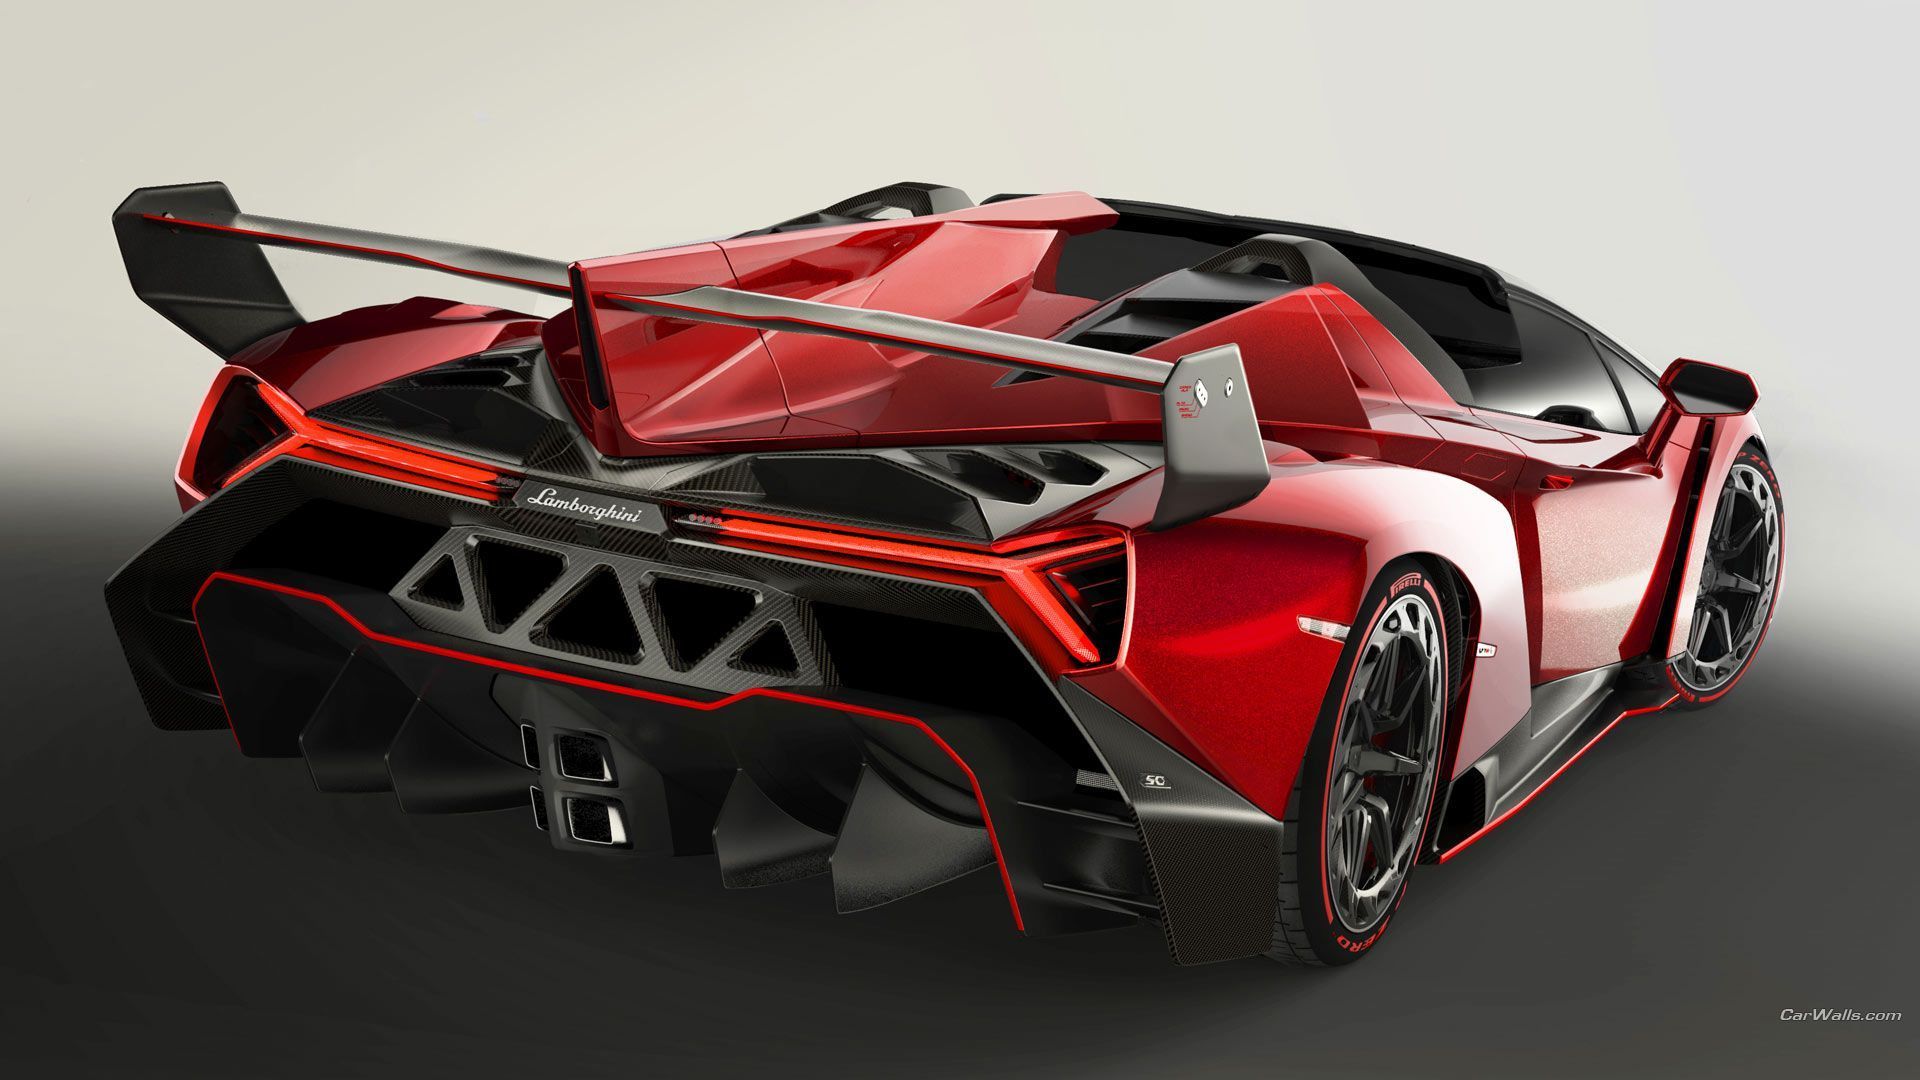 5 2014 Lamborghini Veneno Roadster HD Wallpapers | Backgrounds ...